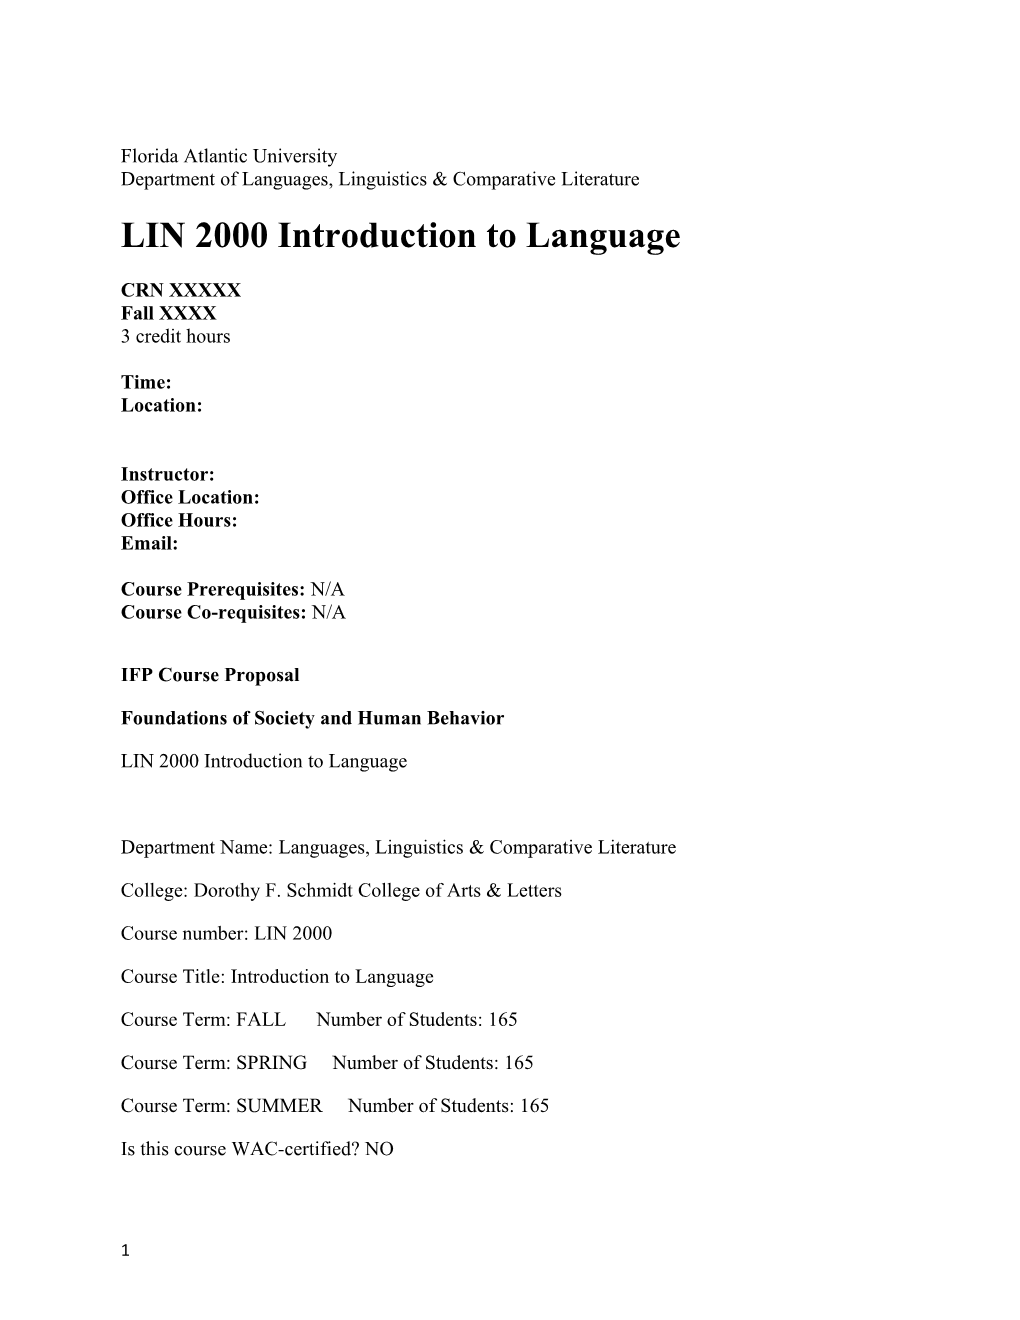 Department of Languages, Linguistics & Comparative Literature